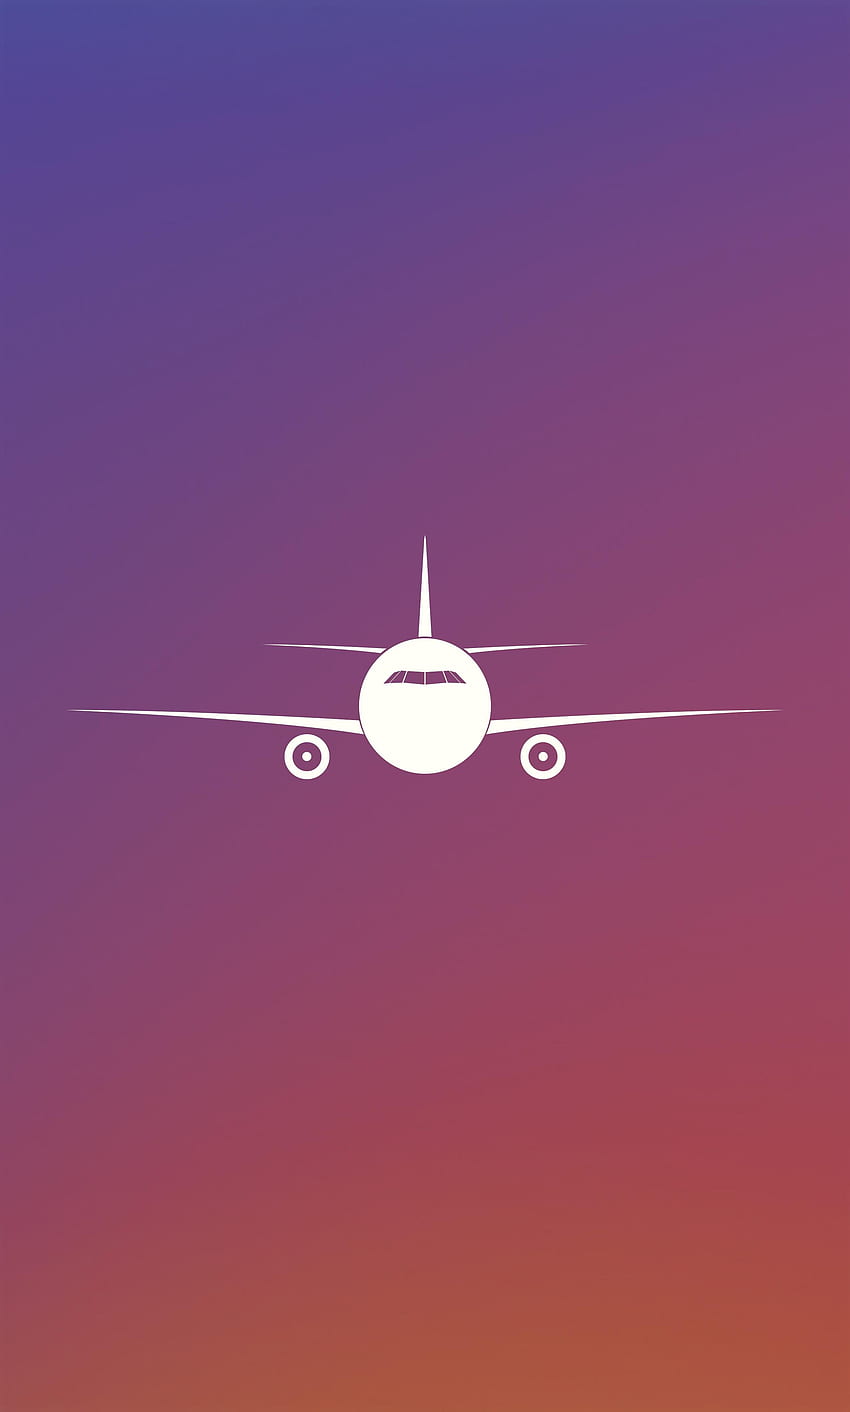 56,047 Airplanes Wallpaper Images, Stock Photos & Vectors | Shutterstock